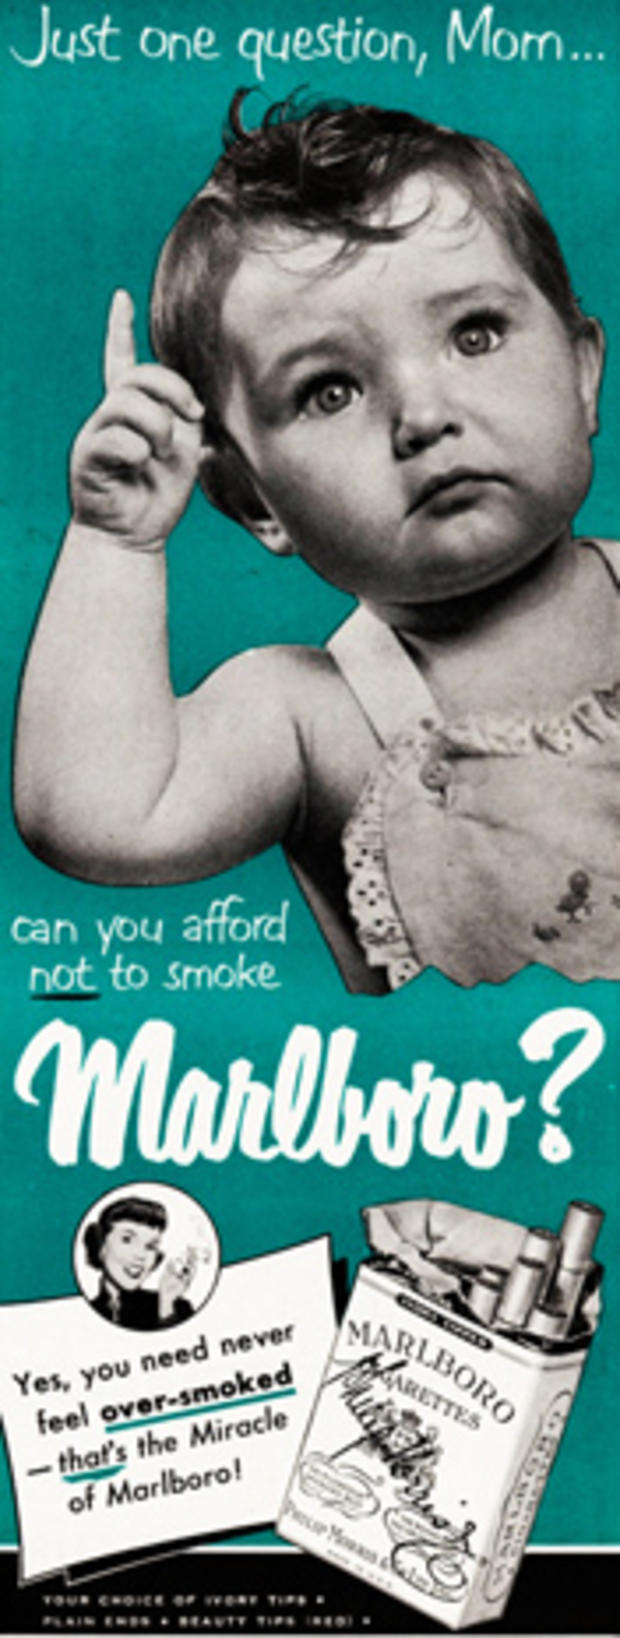 cigarette-adsbabystanford.jpg 